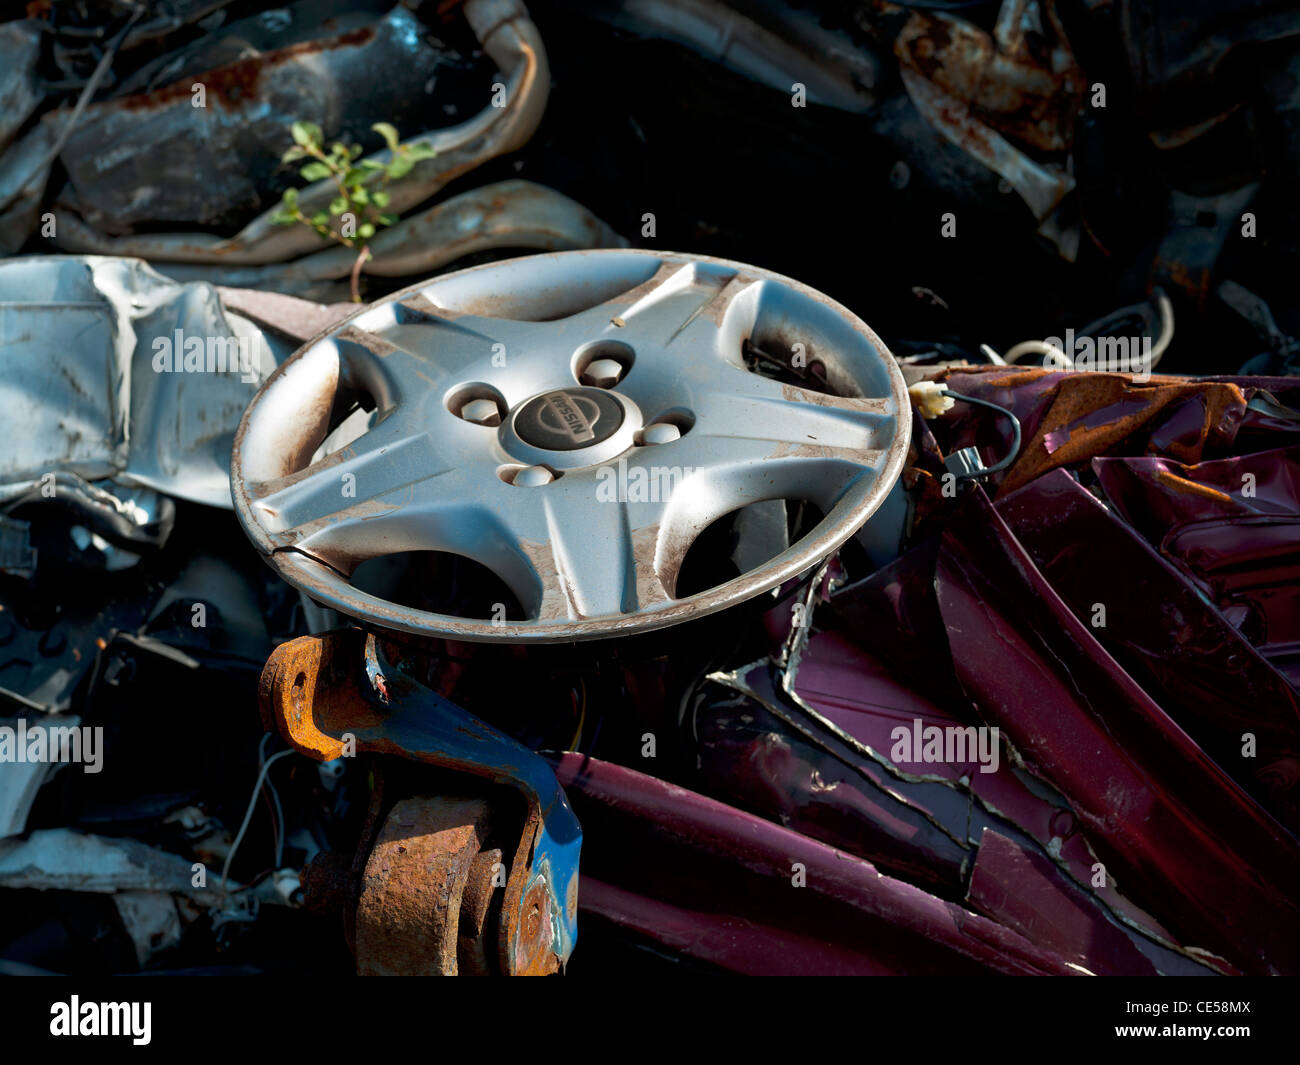 wheel trim broken in car scrapyard Stock Photo